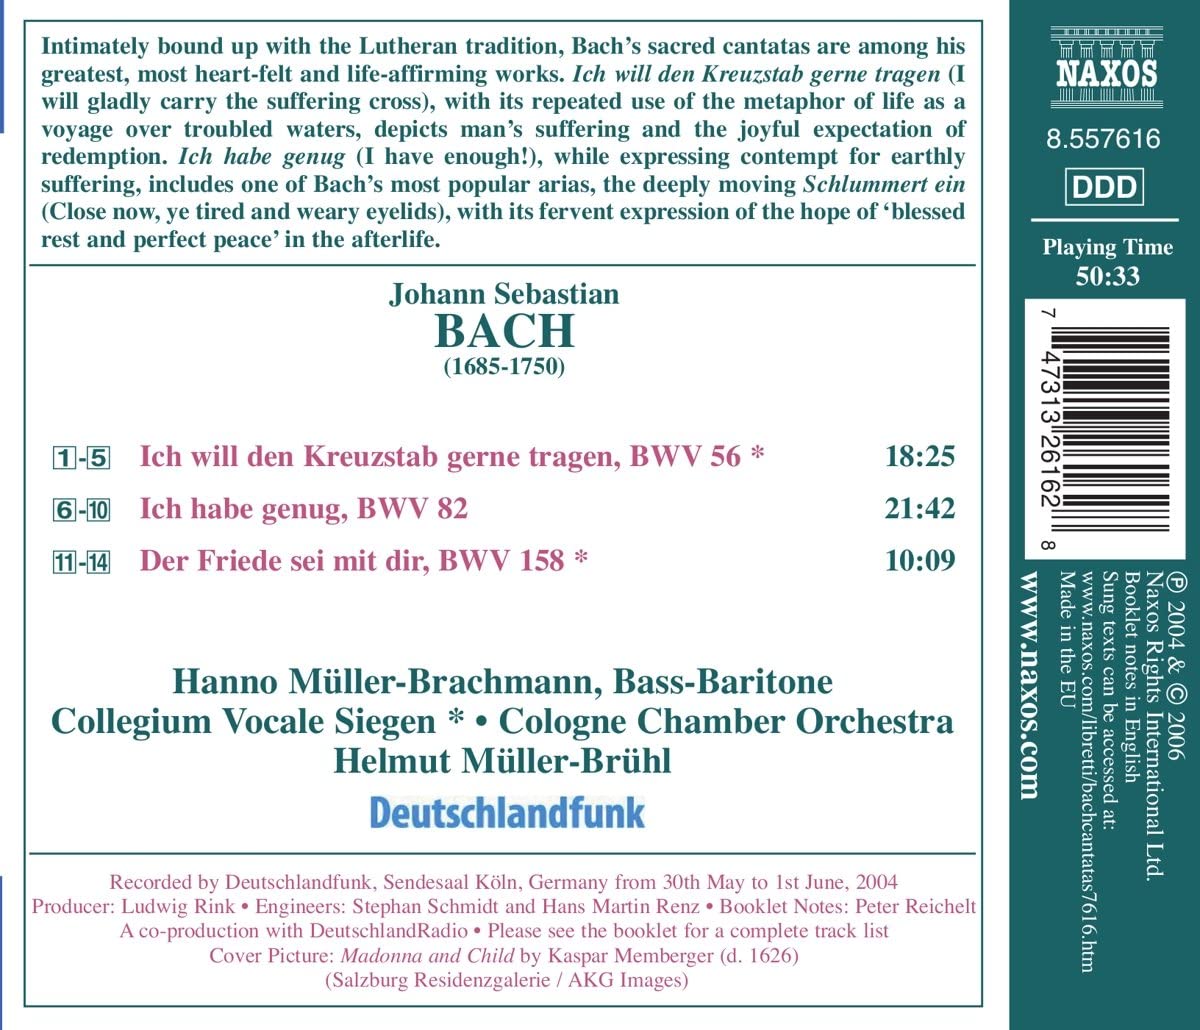 BACH: Sacred cantatas for bass - slide-1